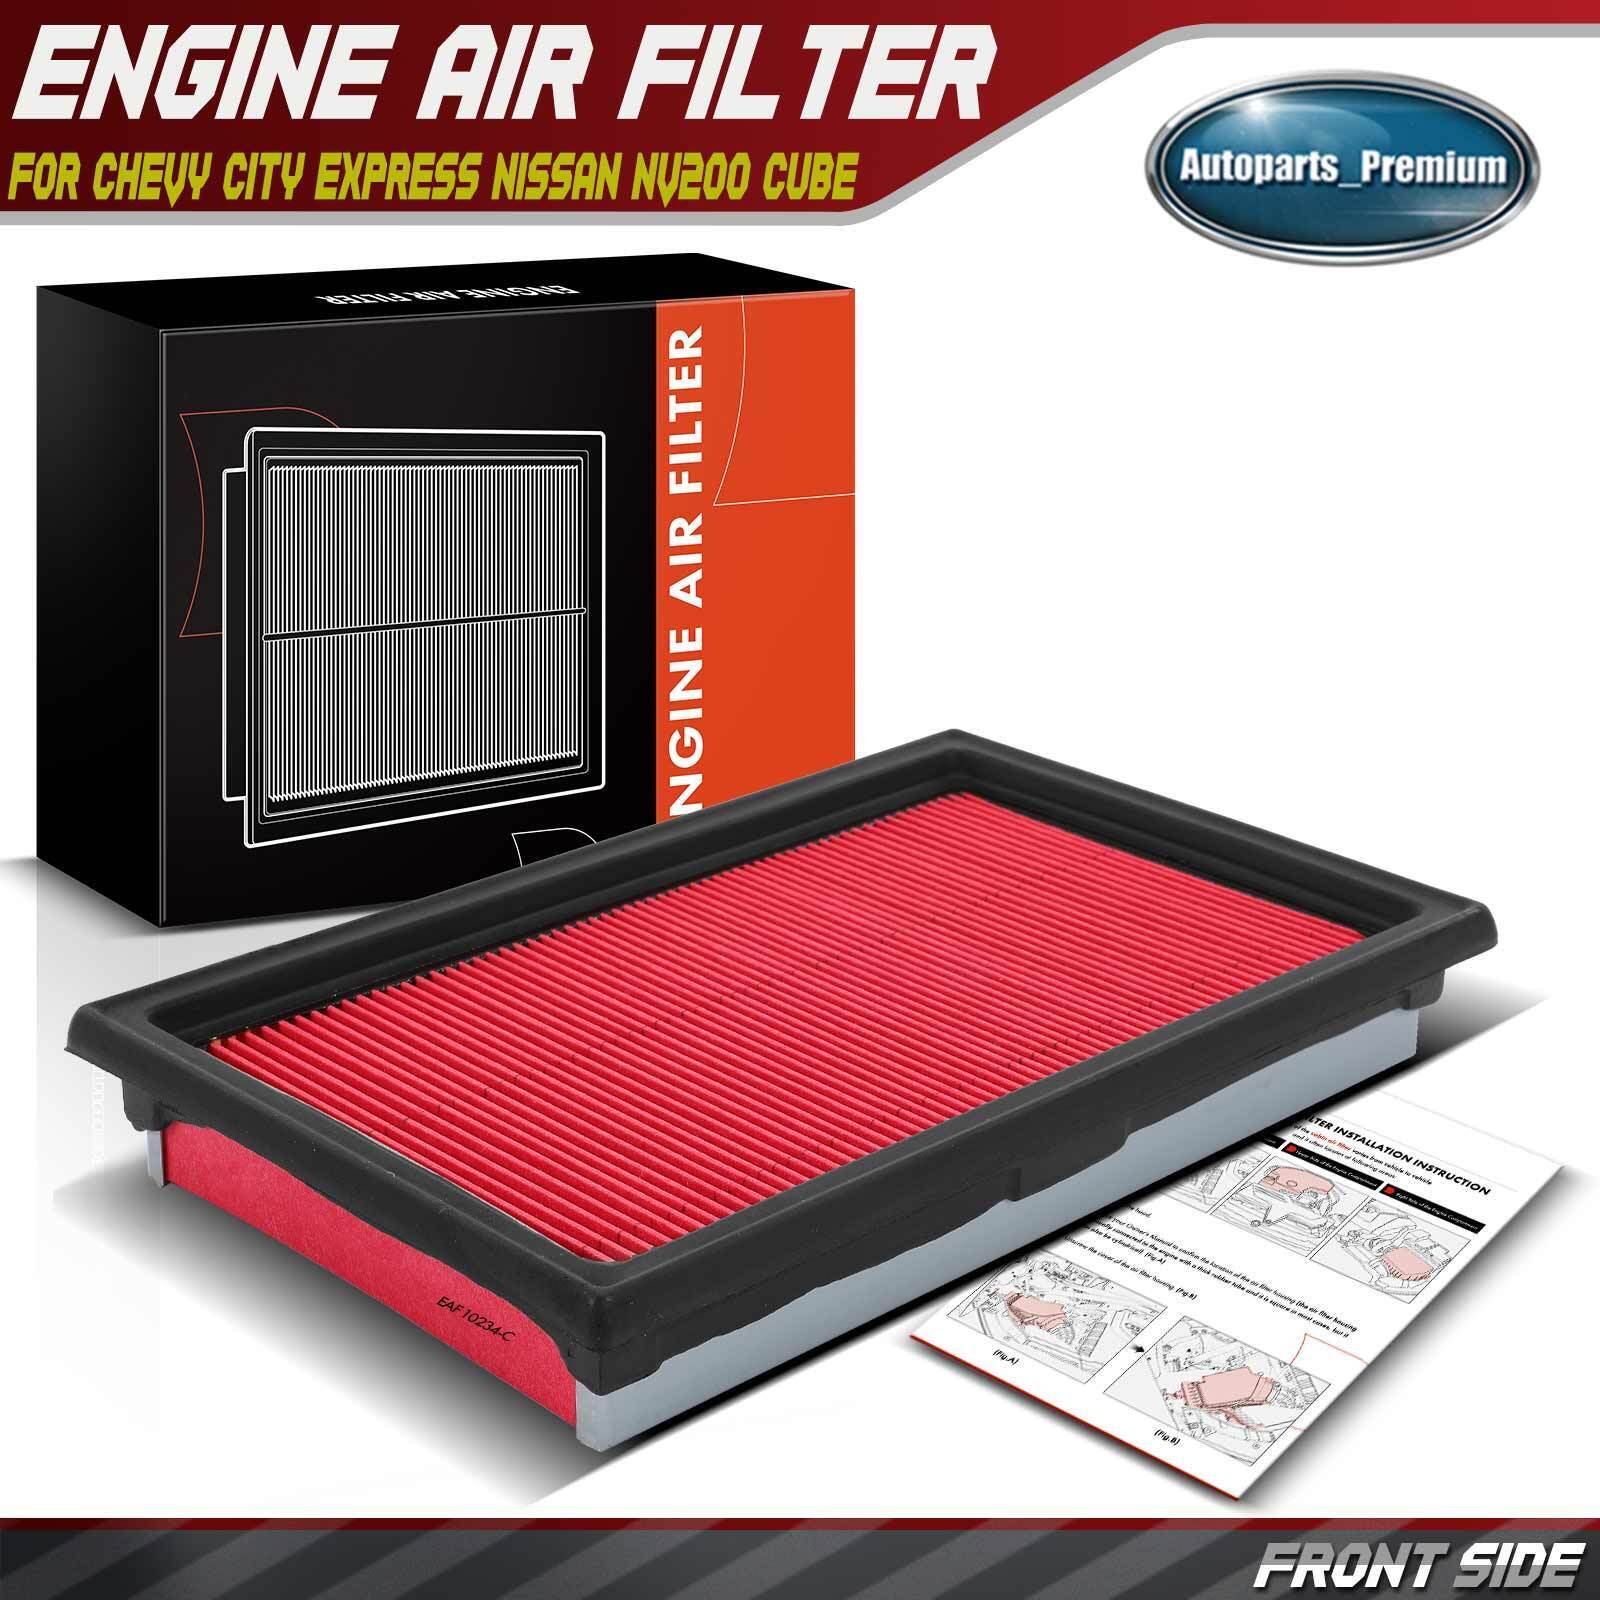 1x Engine Air Filter for Nissan Versa Cube NV200 Chevy City Express INFINITI Q50